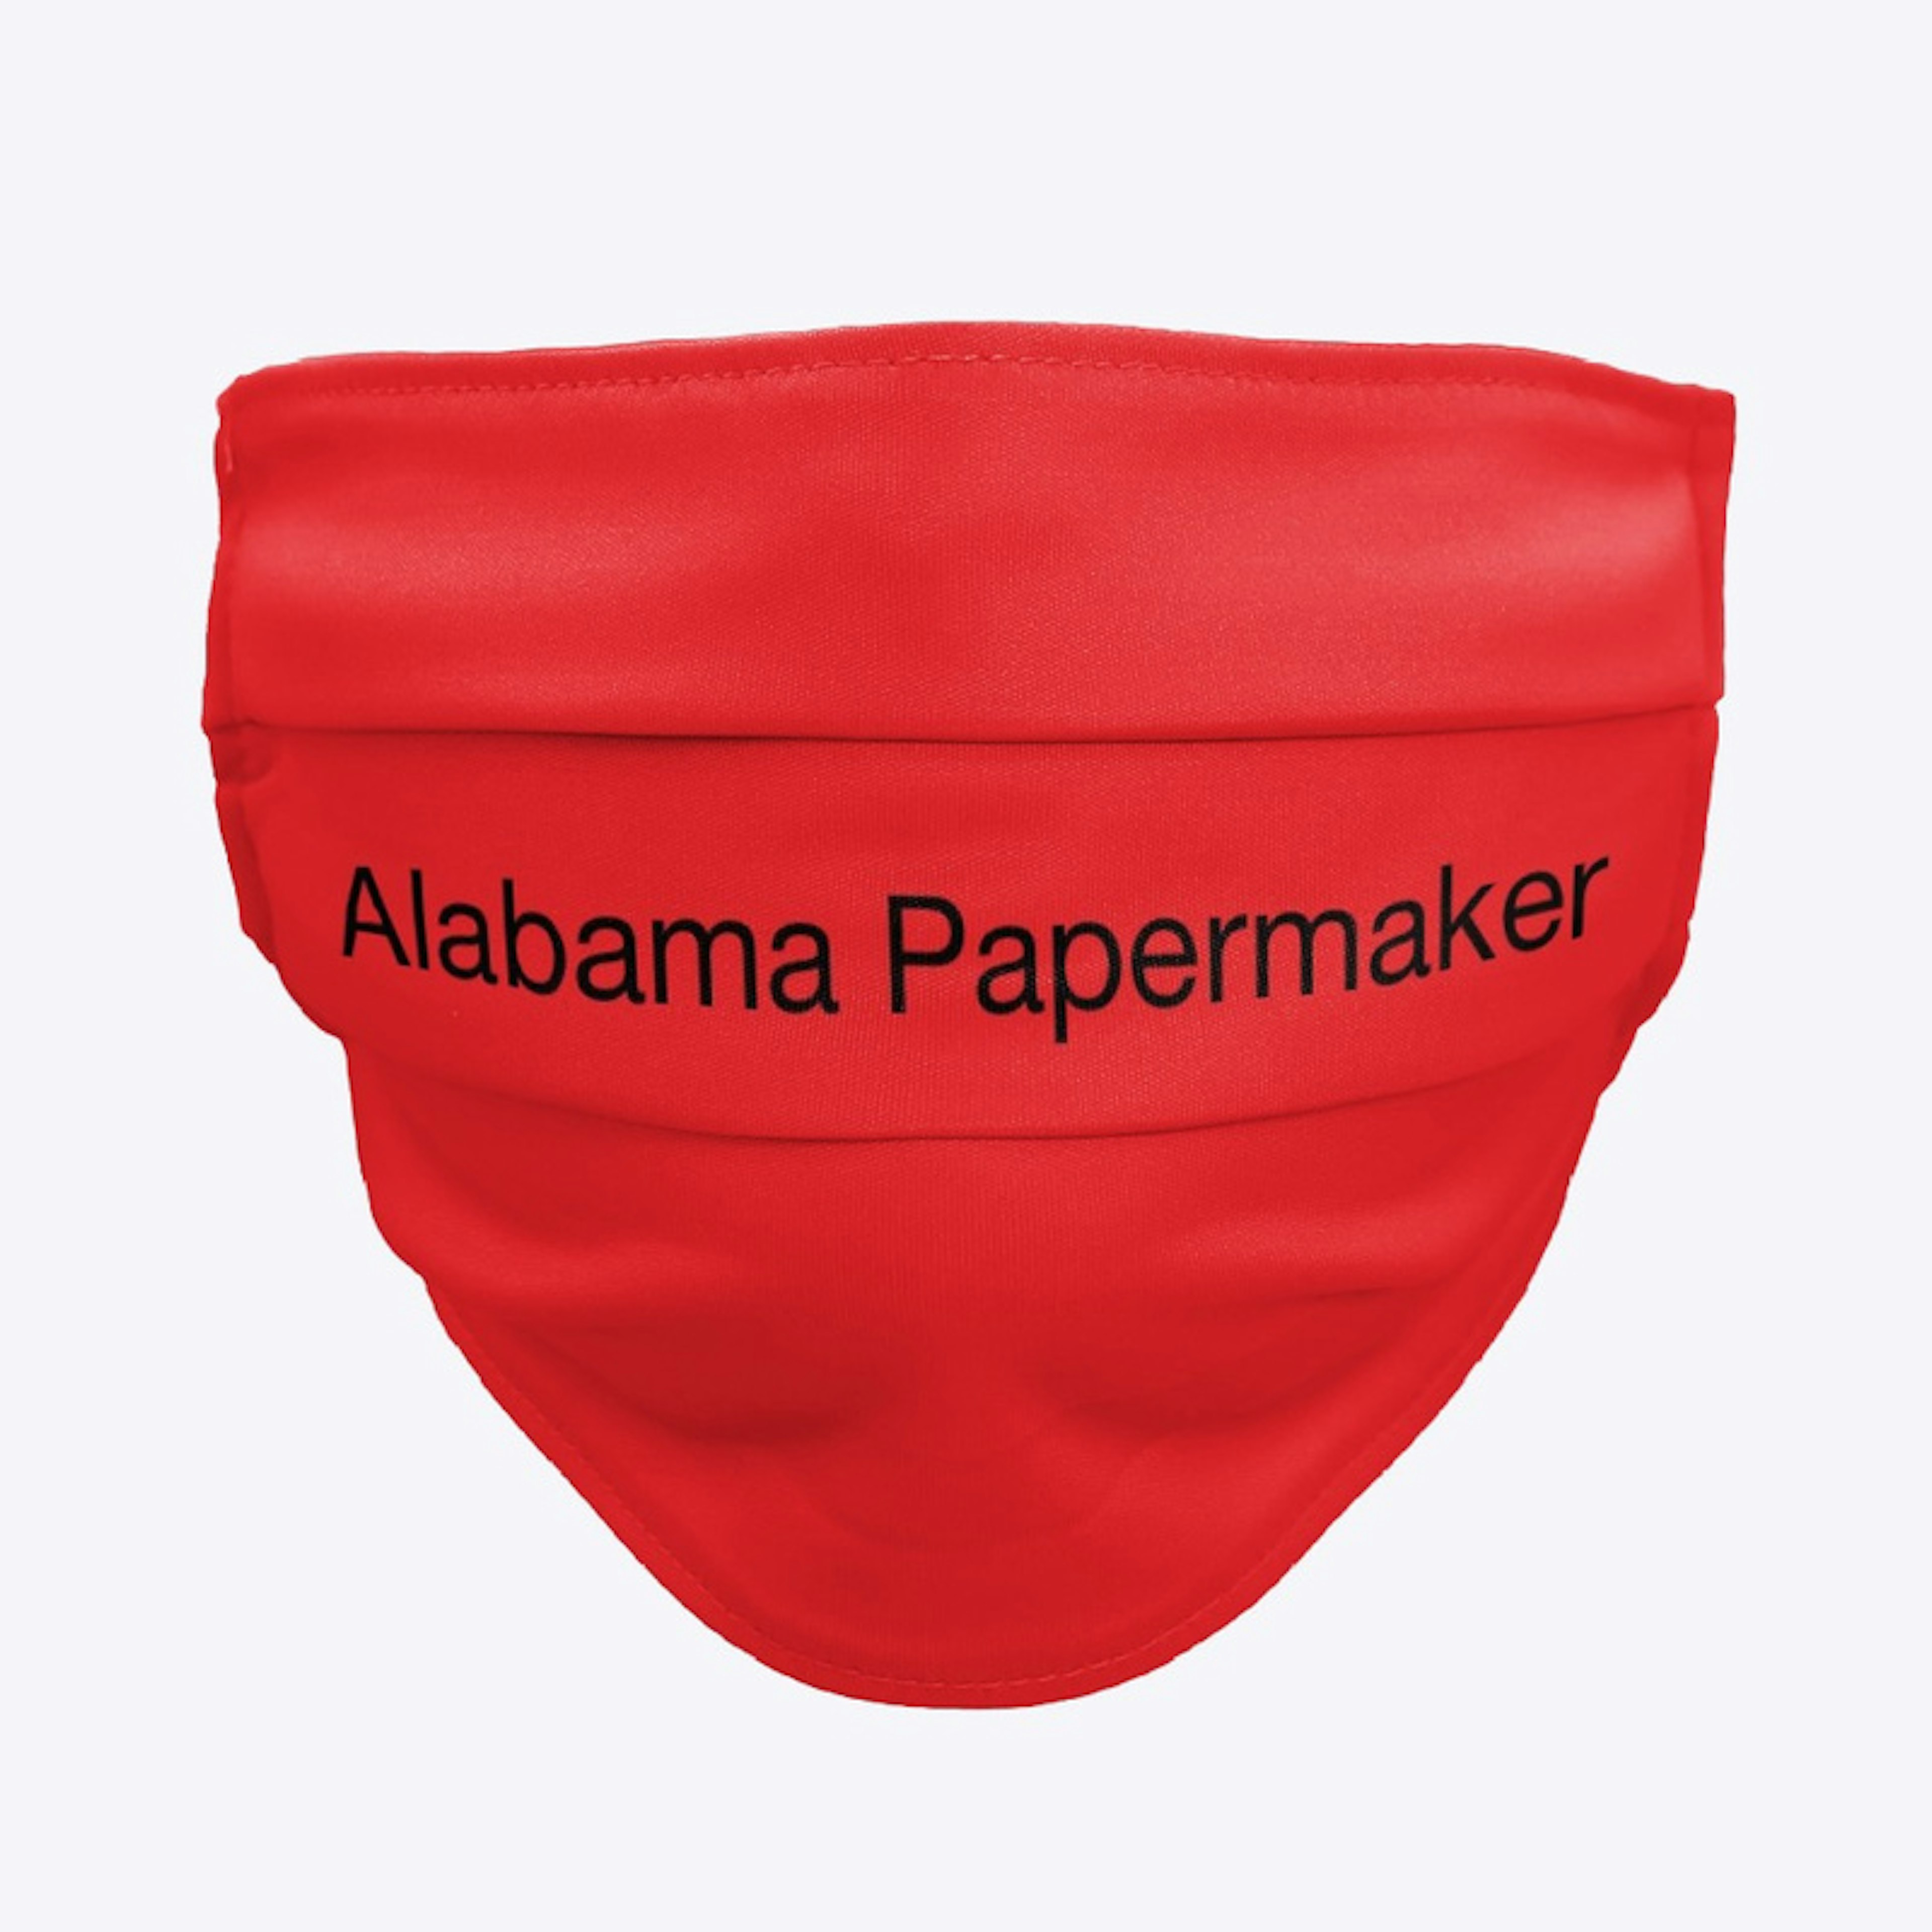 Alabama Papermaker